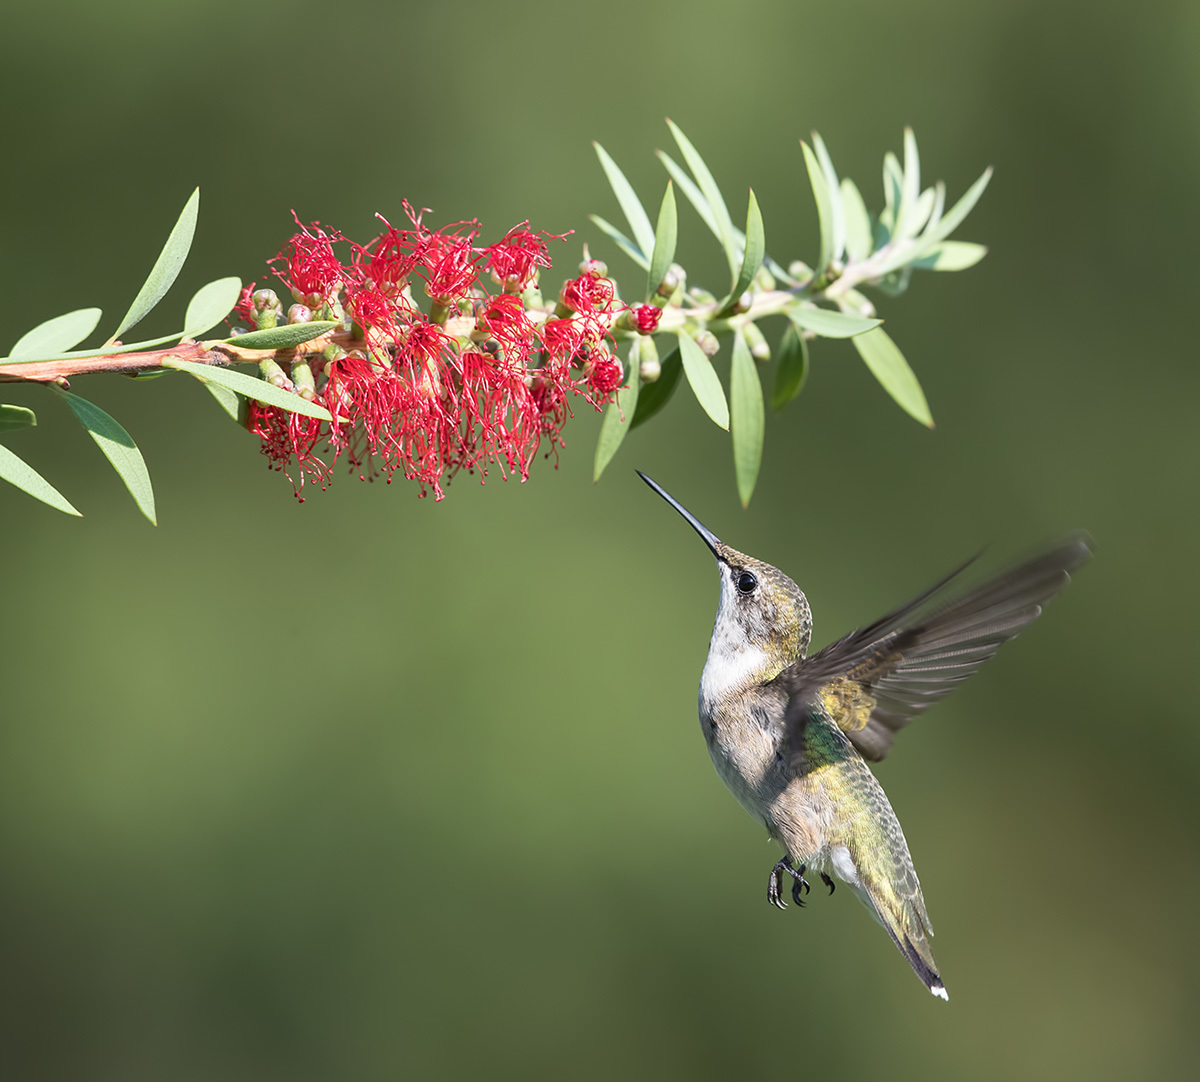 The female Hummingbird Anne in flight chooses a flower for feeding